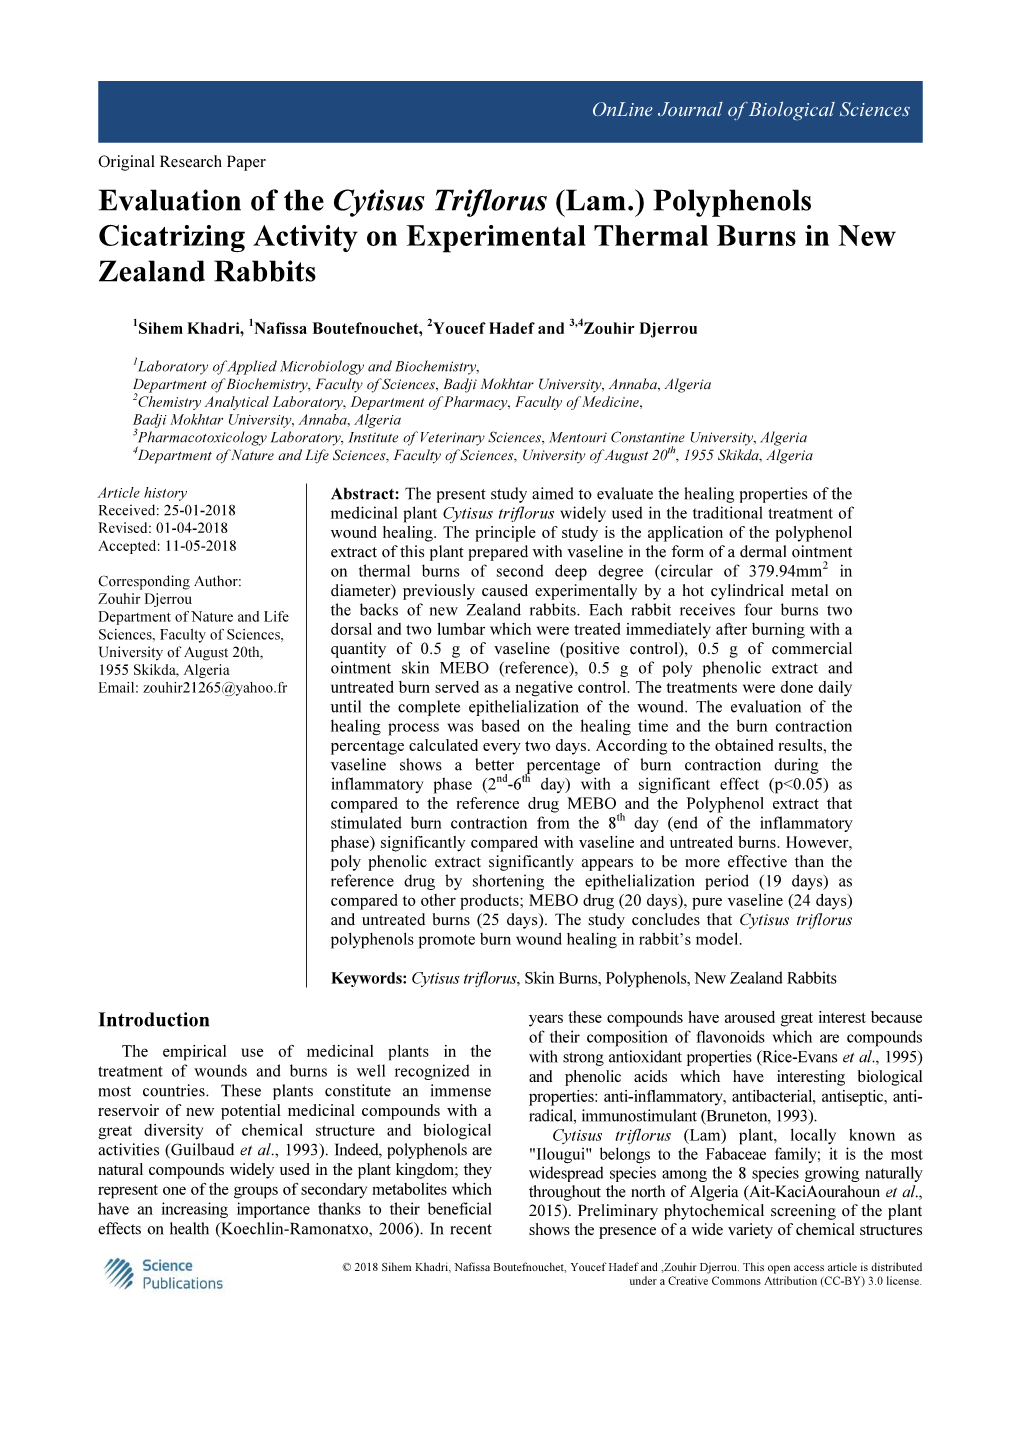 (Lam.) Polyphenols Cicatrizing Activity on Experimental Thermal Burns in New Zealand Rabbits